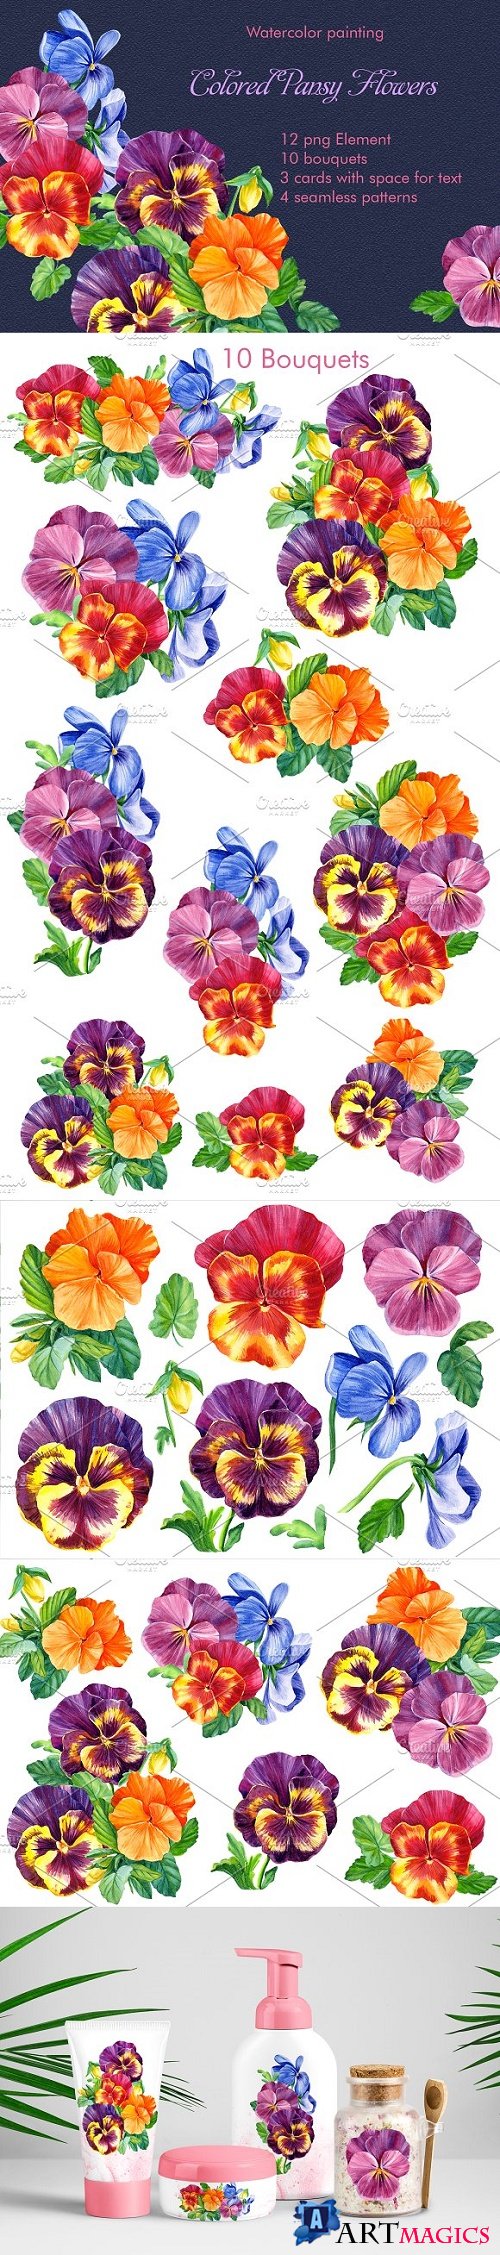 Colored Pansies Flowers 2511868